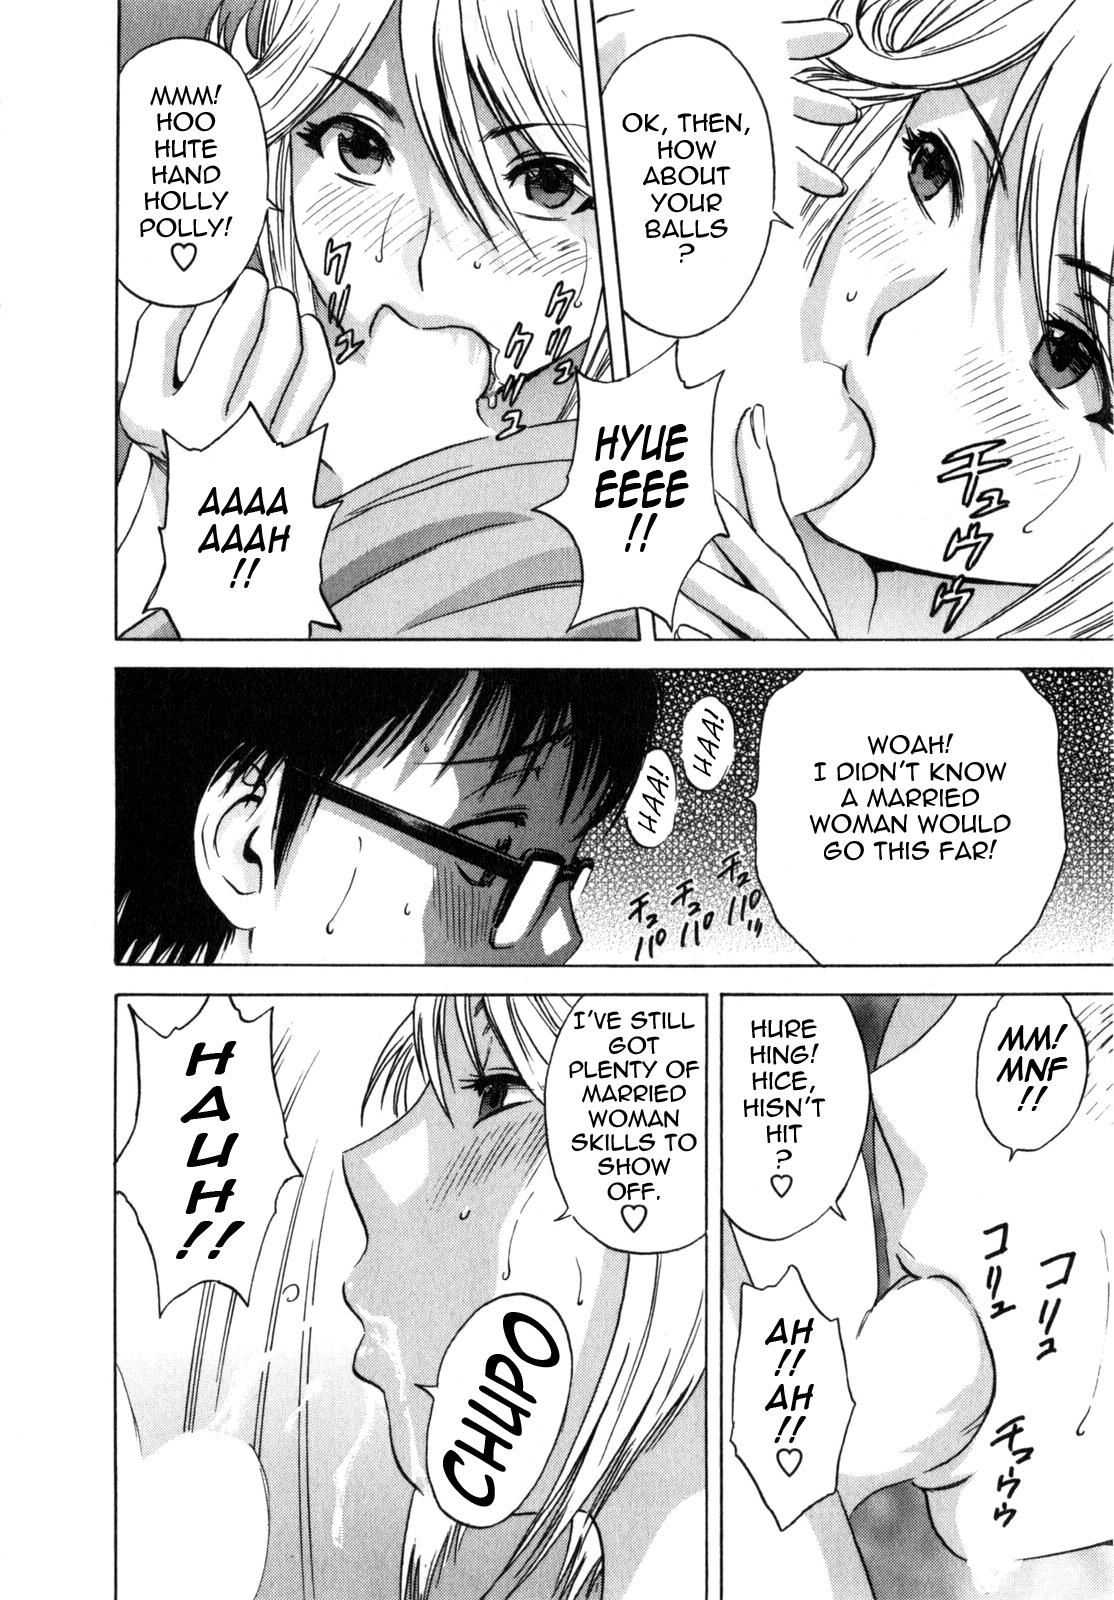 [Hidemaru] Life with Married Women Just Like a Manga 1 - Ch. 1-5 [English] {Tadanohito} 35